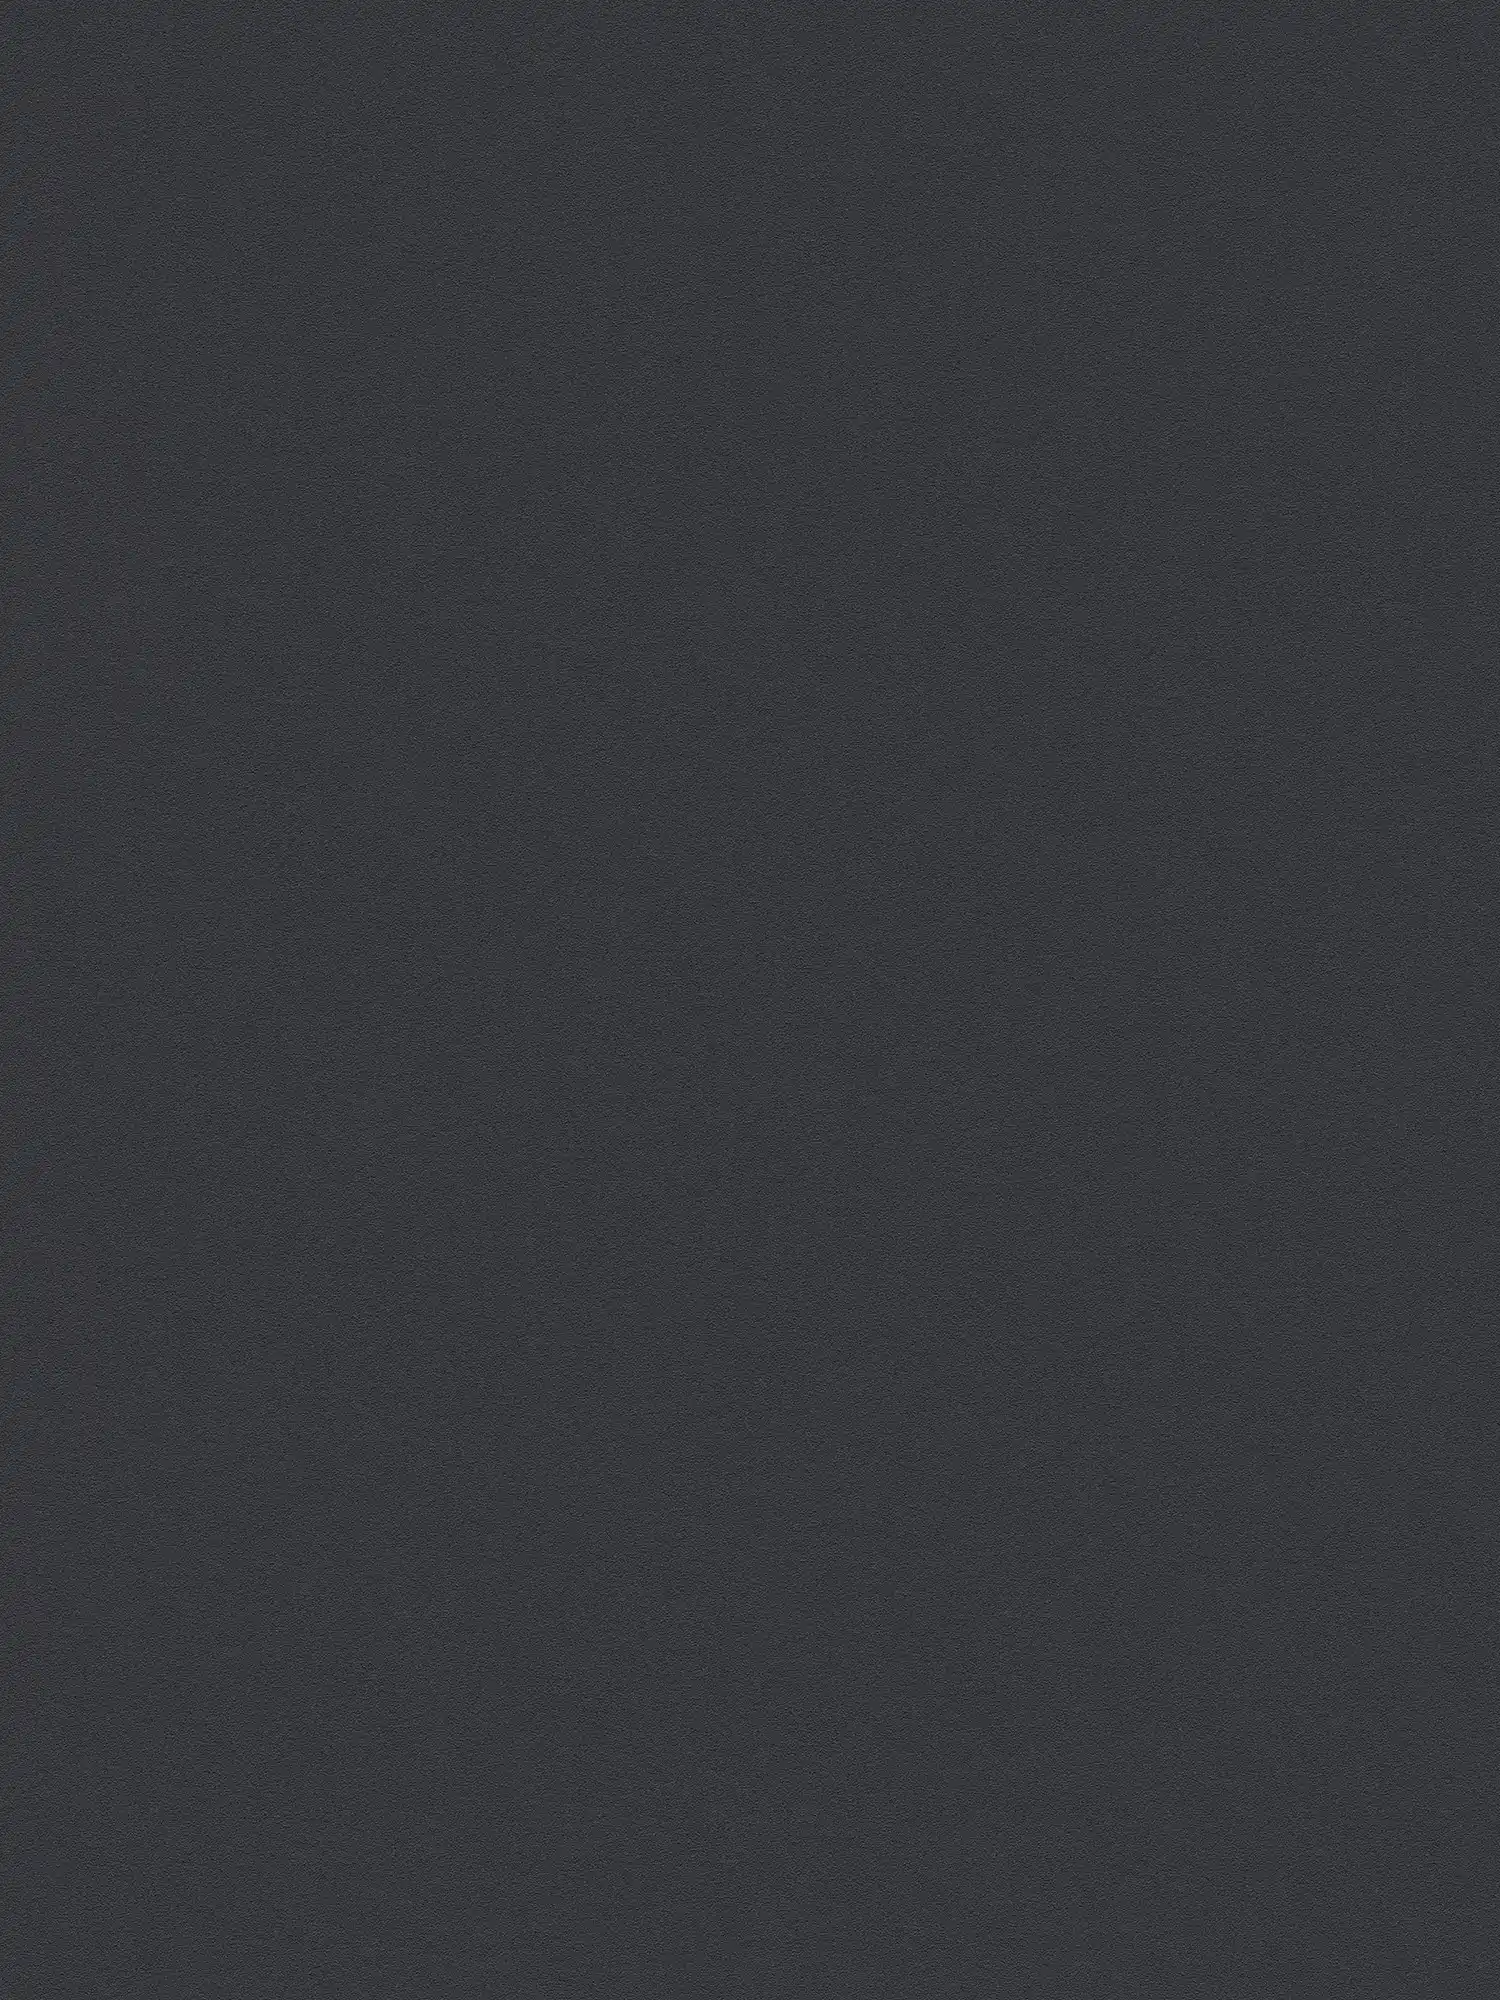 Silk matte non-woven wallpaper black plain with flat structure
